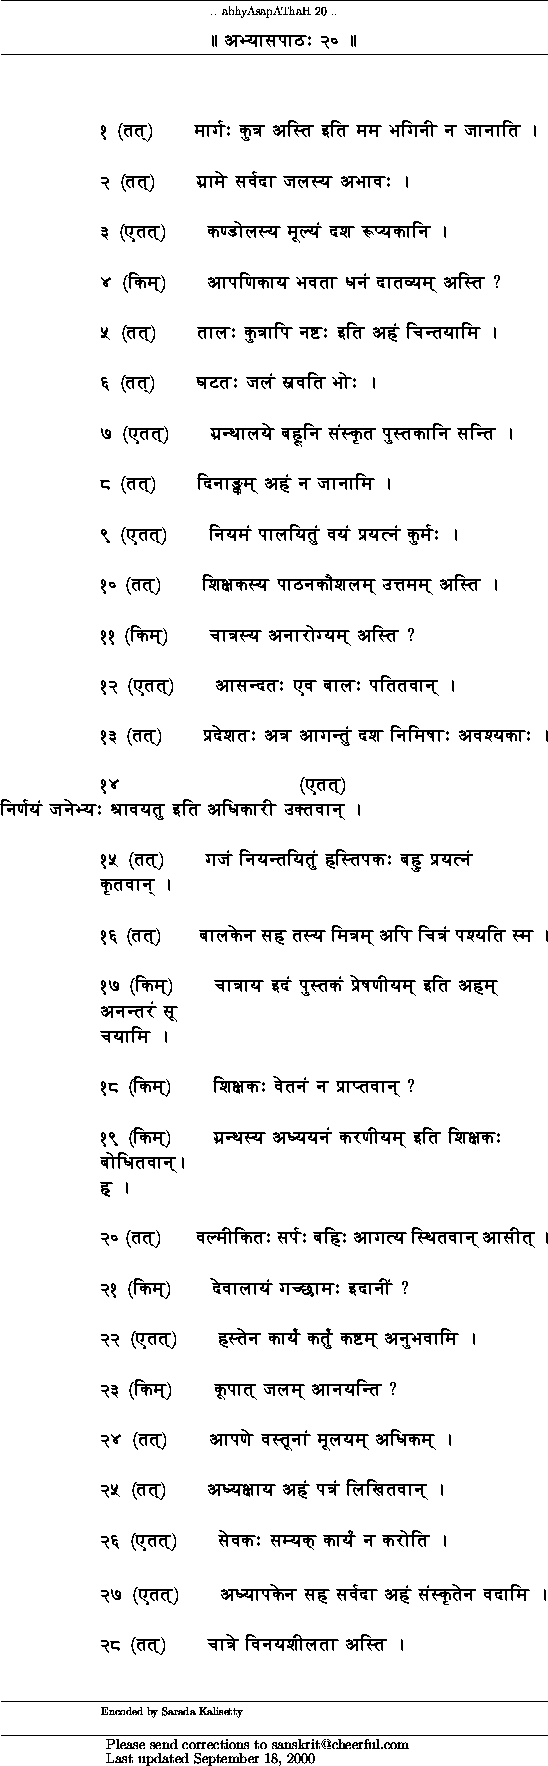 Sanskrit Varnamala Chart With Pictures Pdf